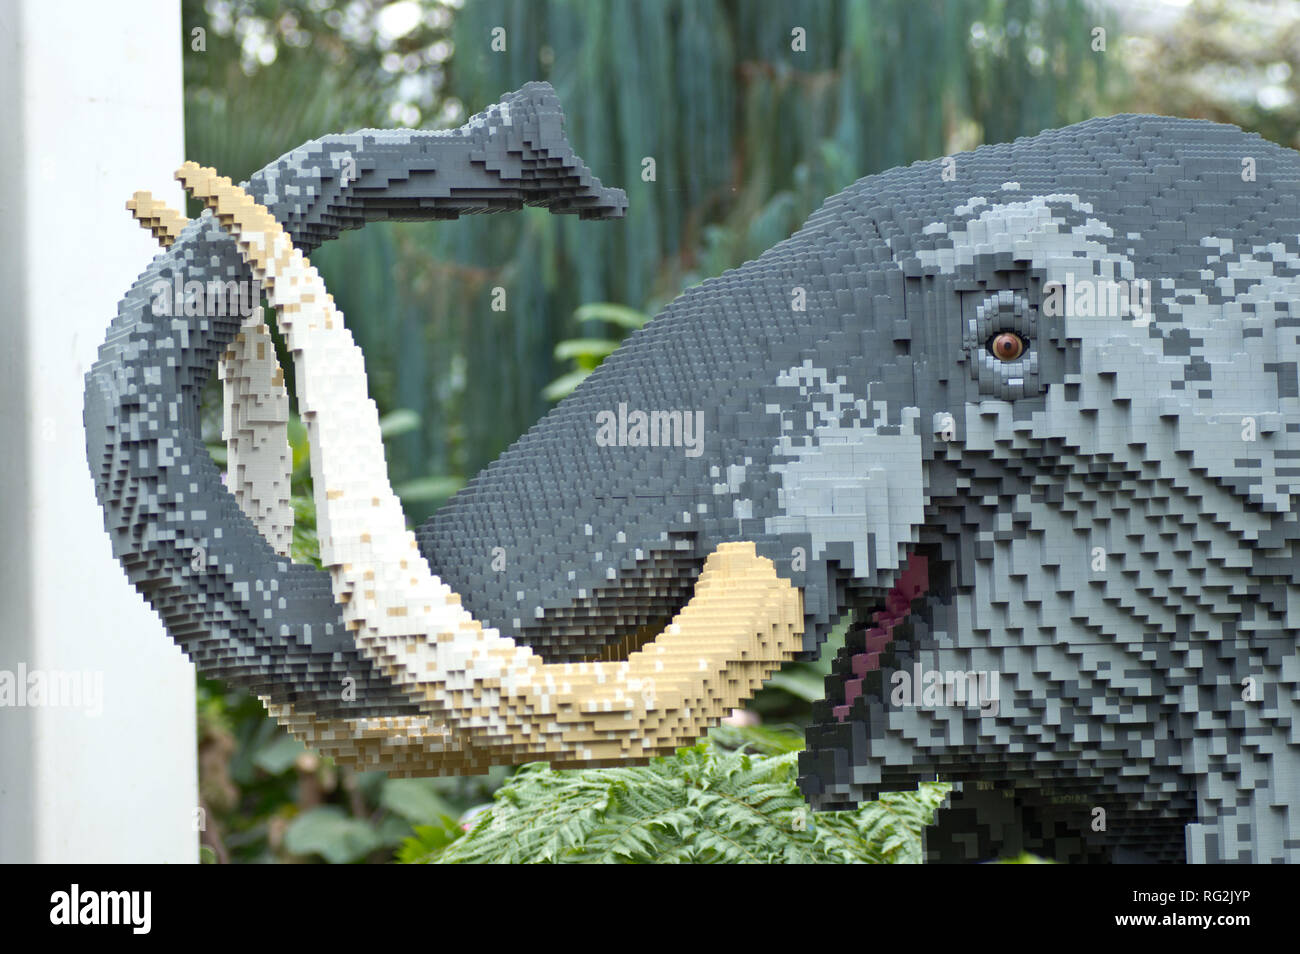 Lego elefant -Fotos und -Bildmaterial in hoher Auflösung – Alamy